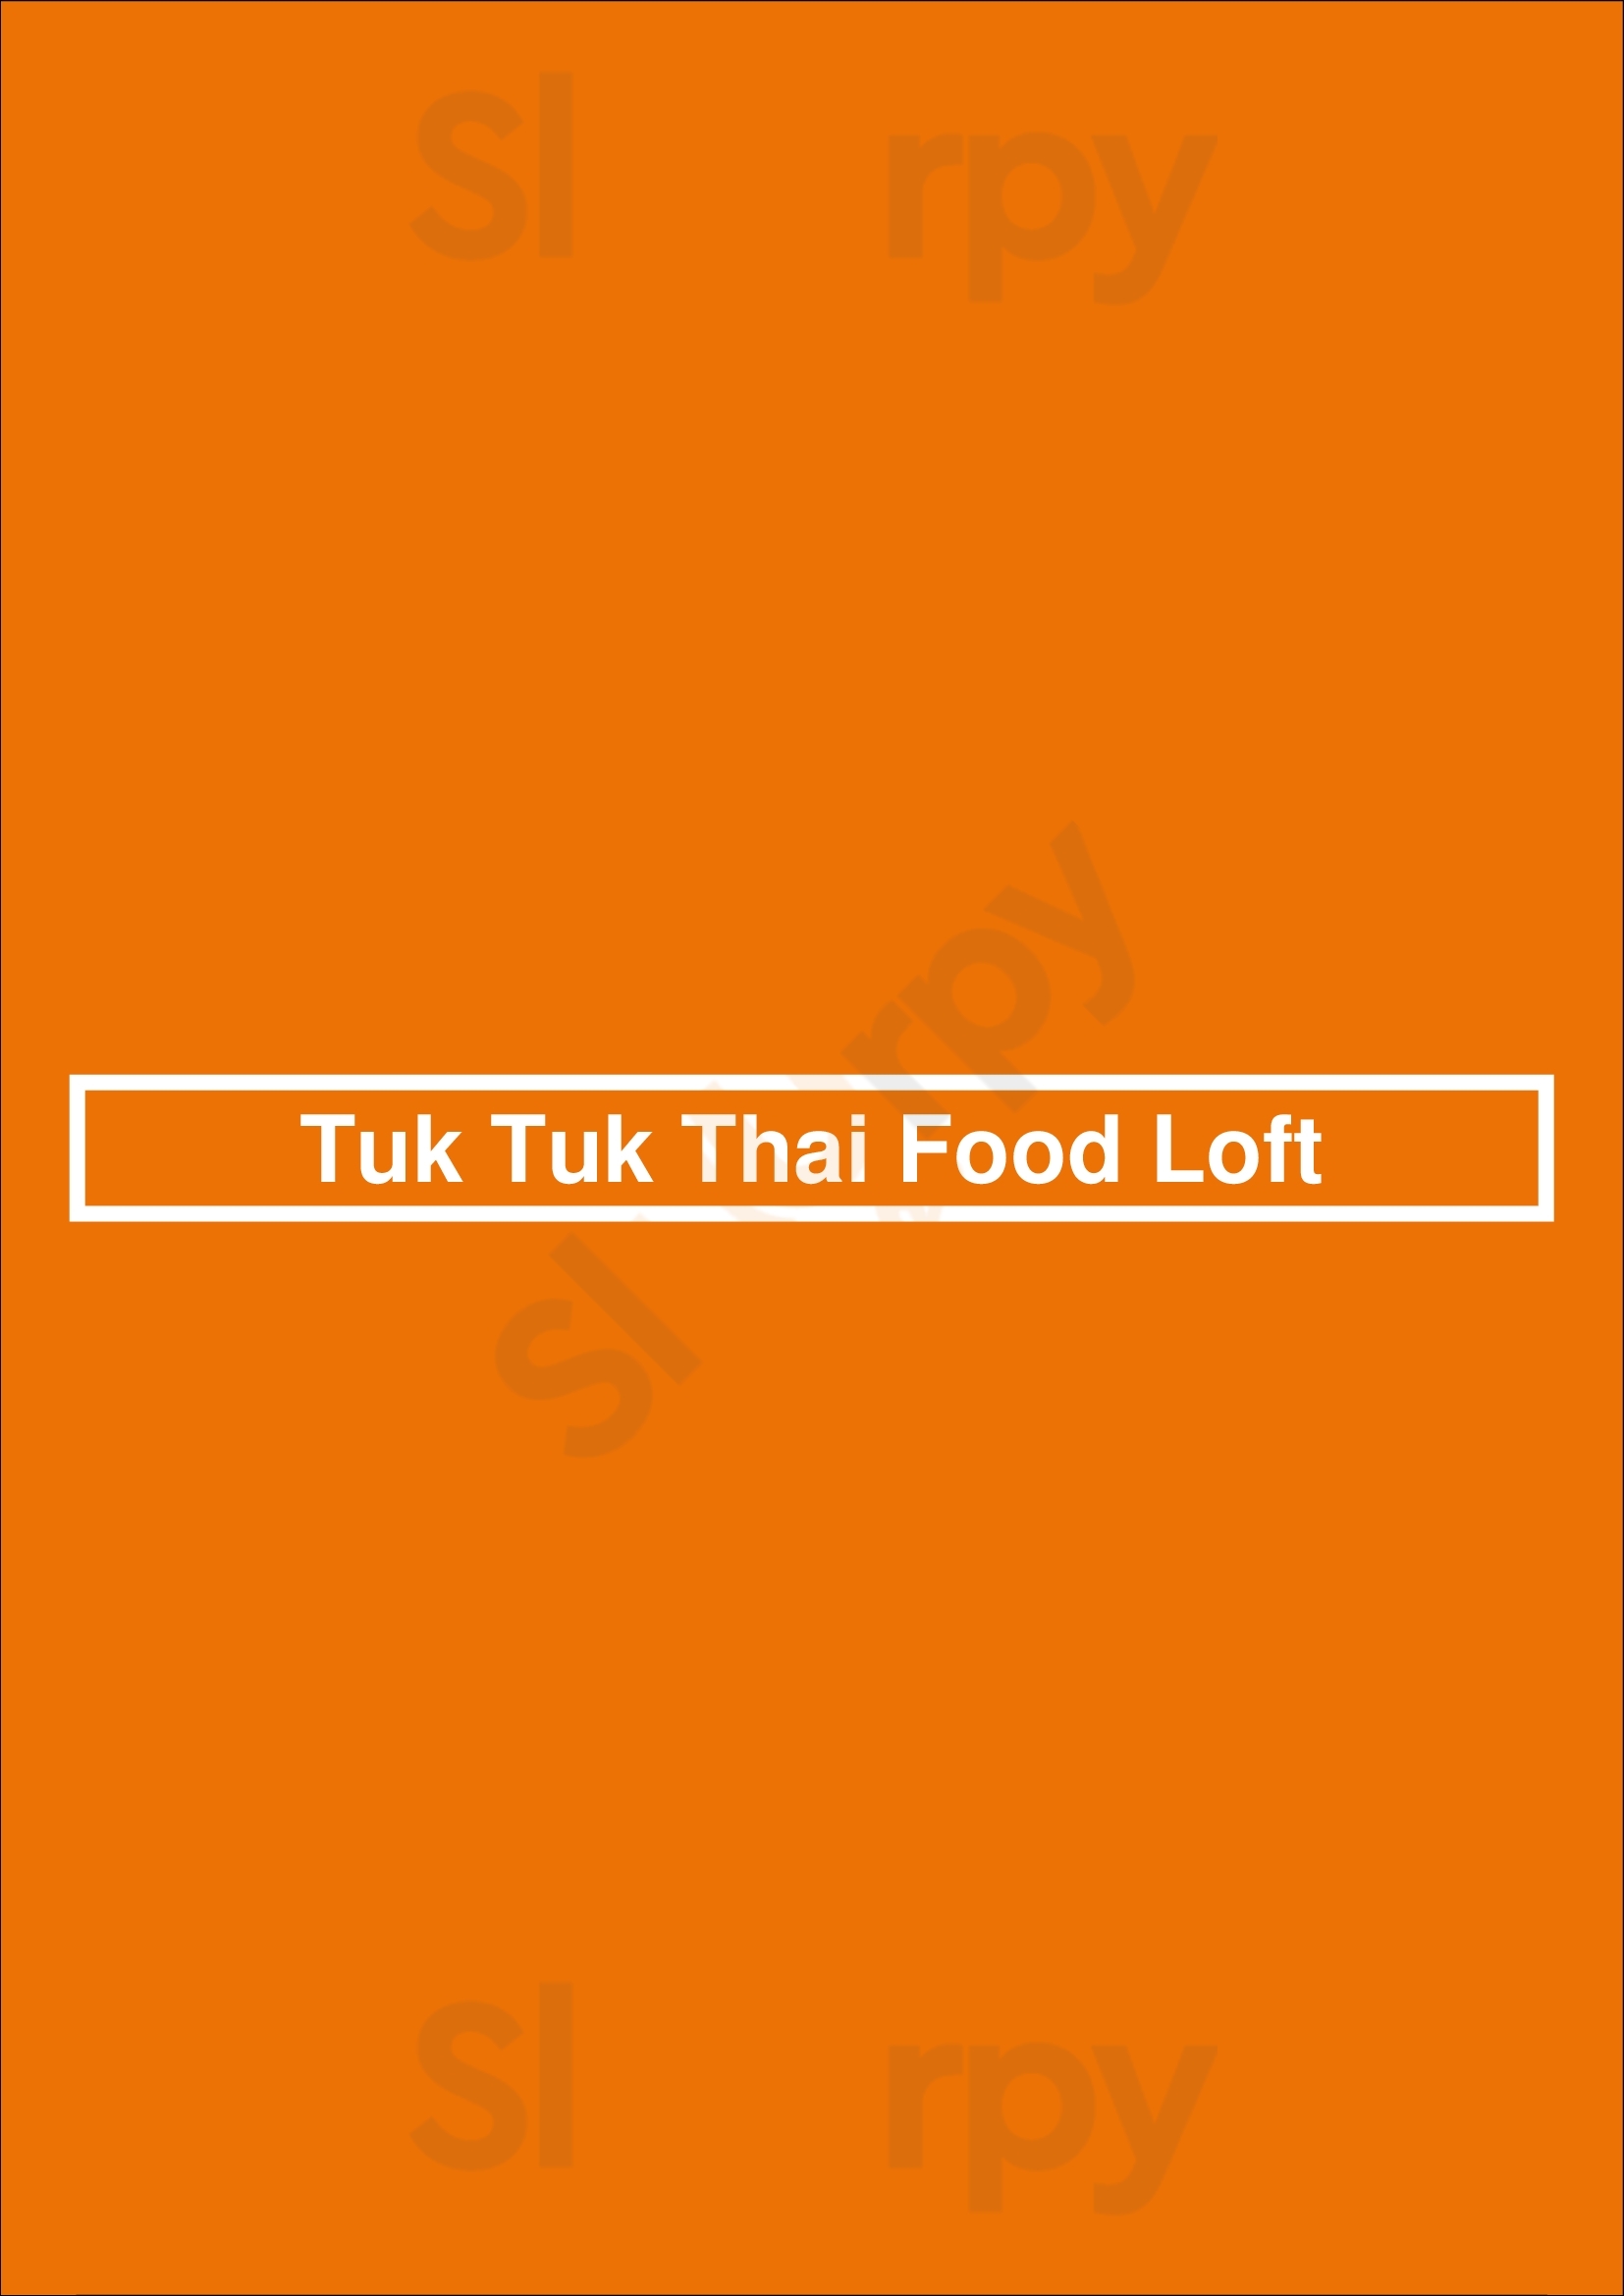 Tuk Tuk Thai Food Loft Atlanta Menu - 1